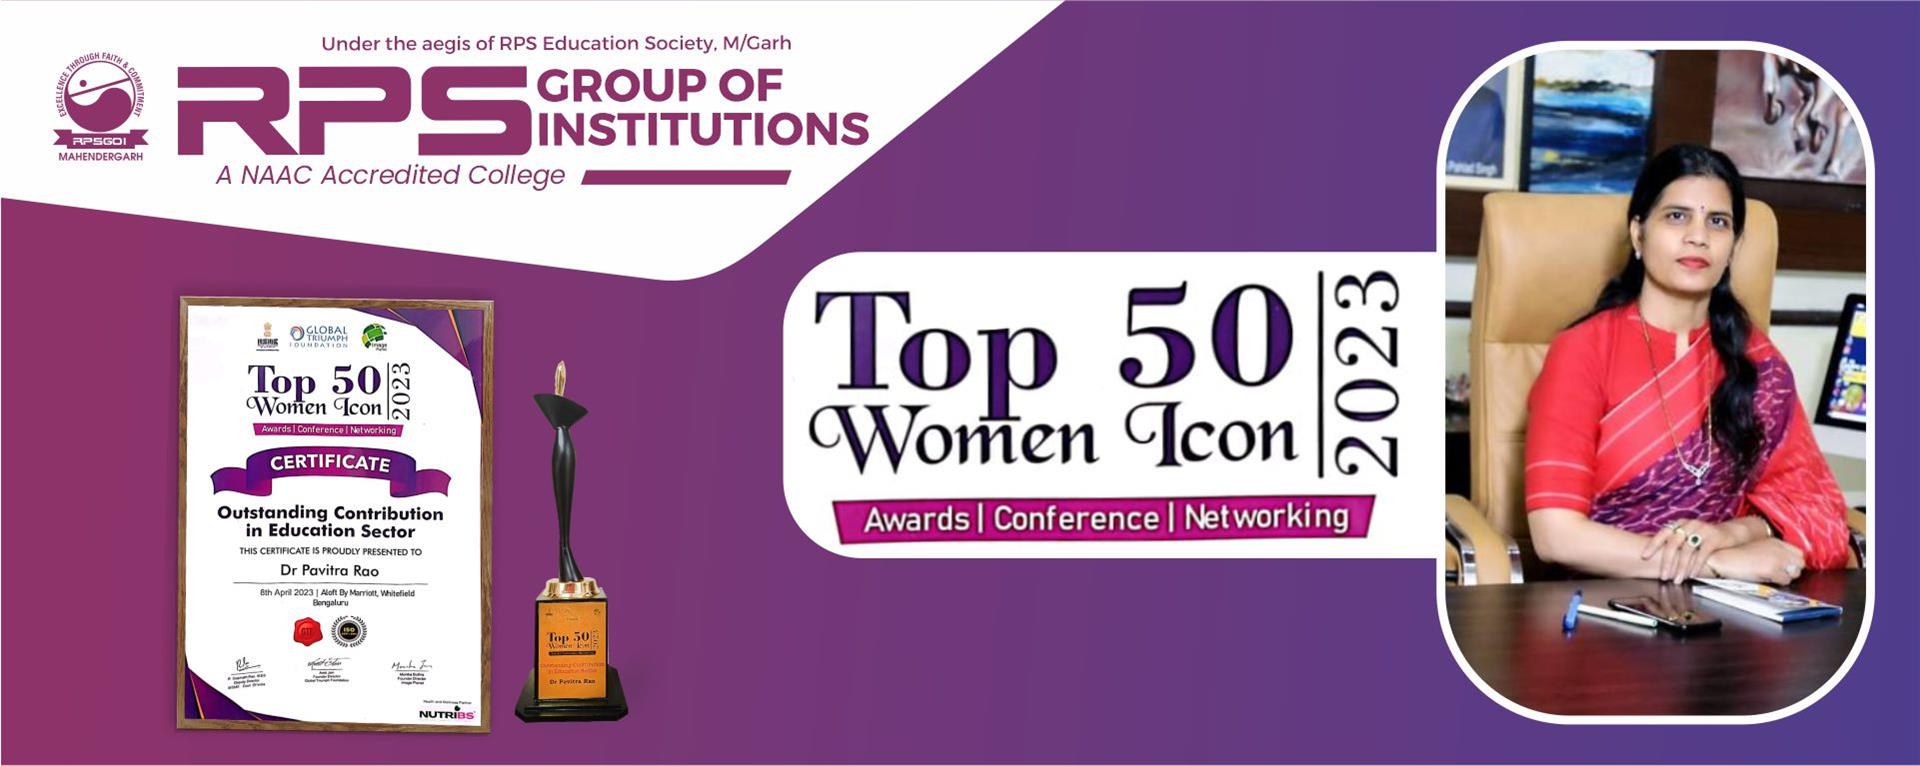 Top 50 Women Award